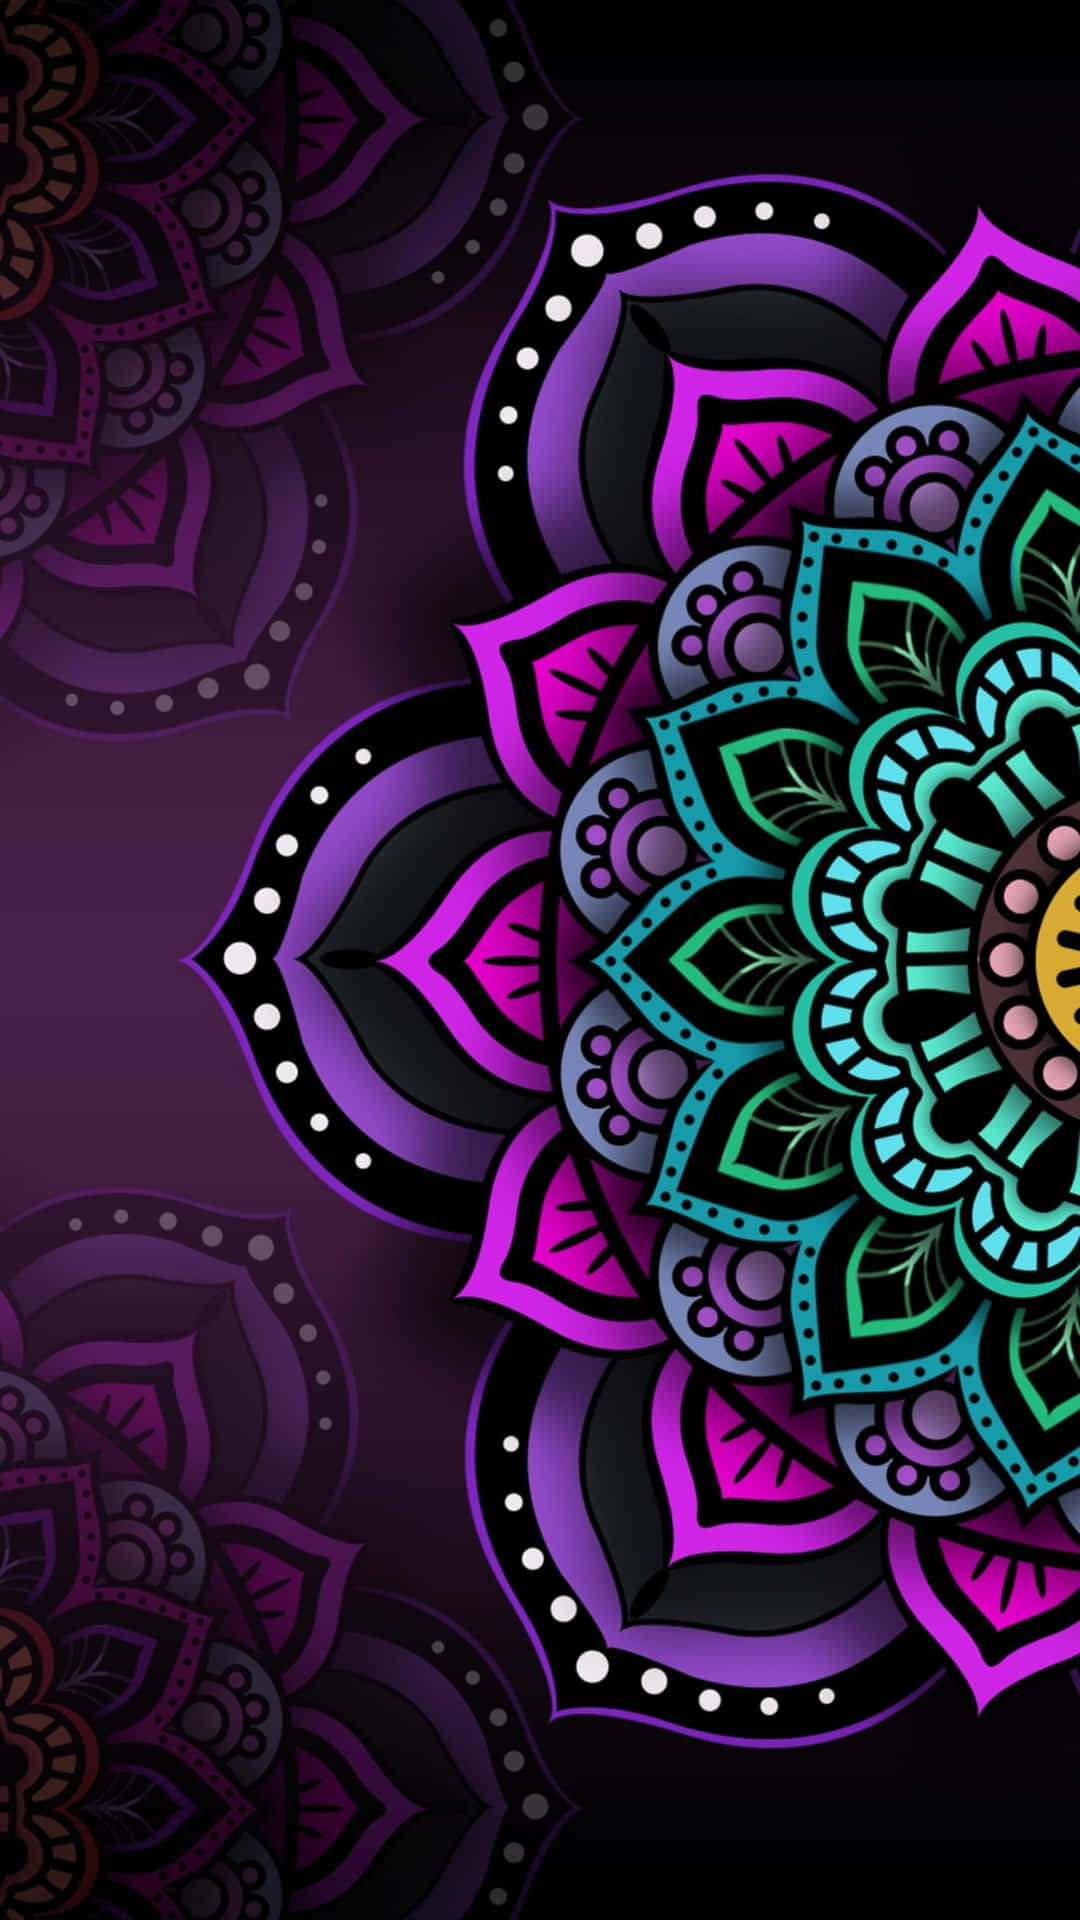 Creative Mandala Art Drawing On Black Background